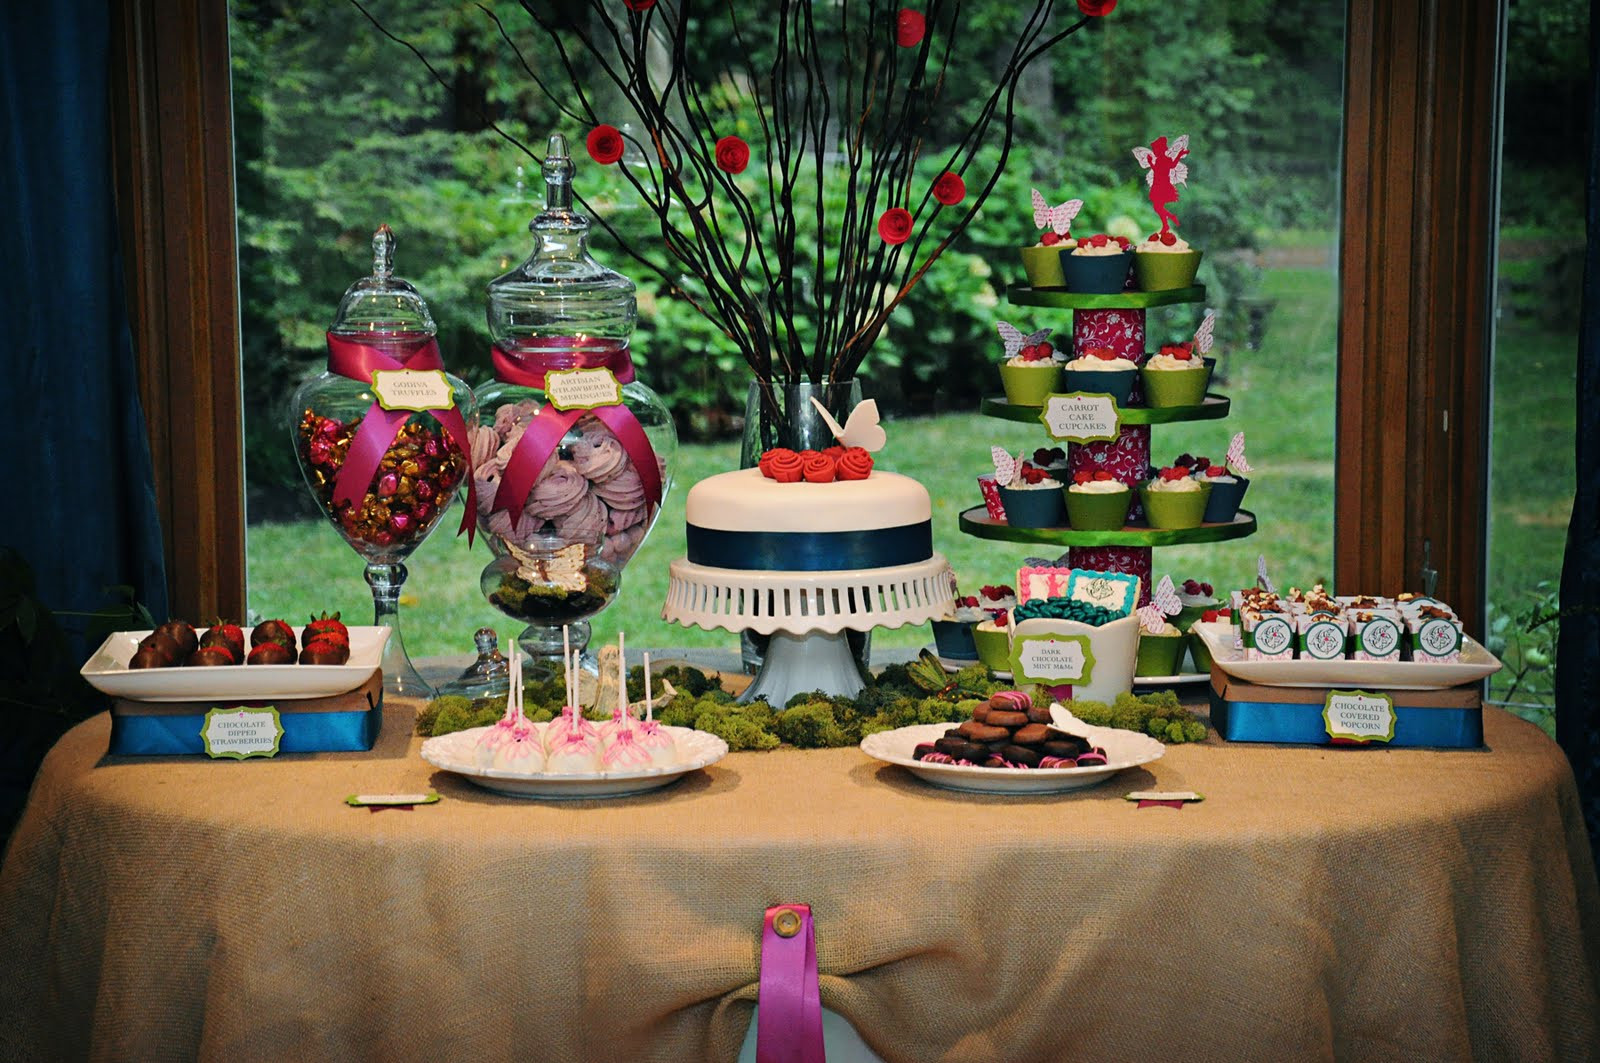 Fairy Birthday Party Ideas
 An Adult Garden Fairy Birthday Celebrations at Home